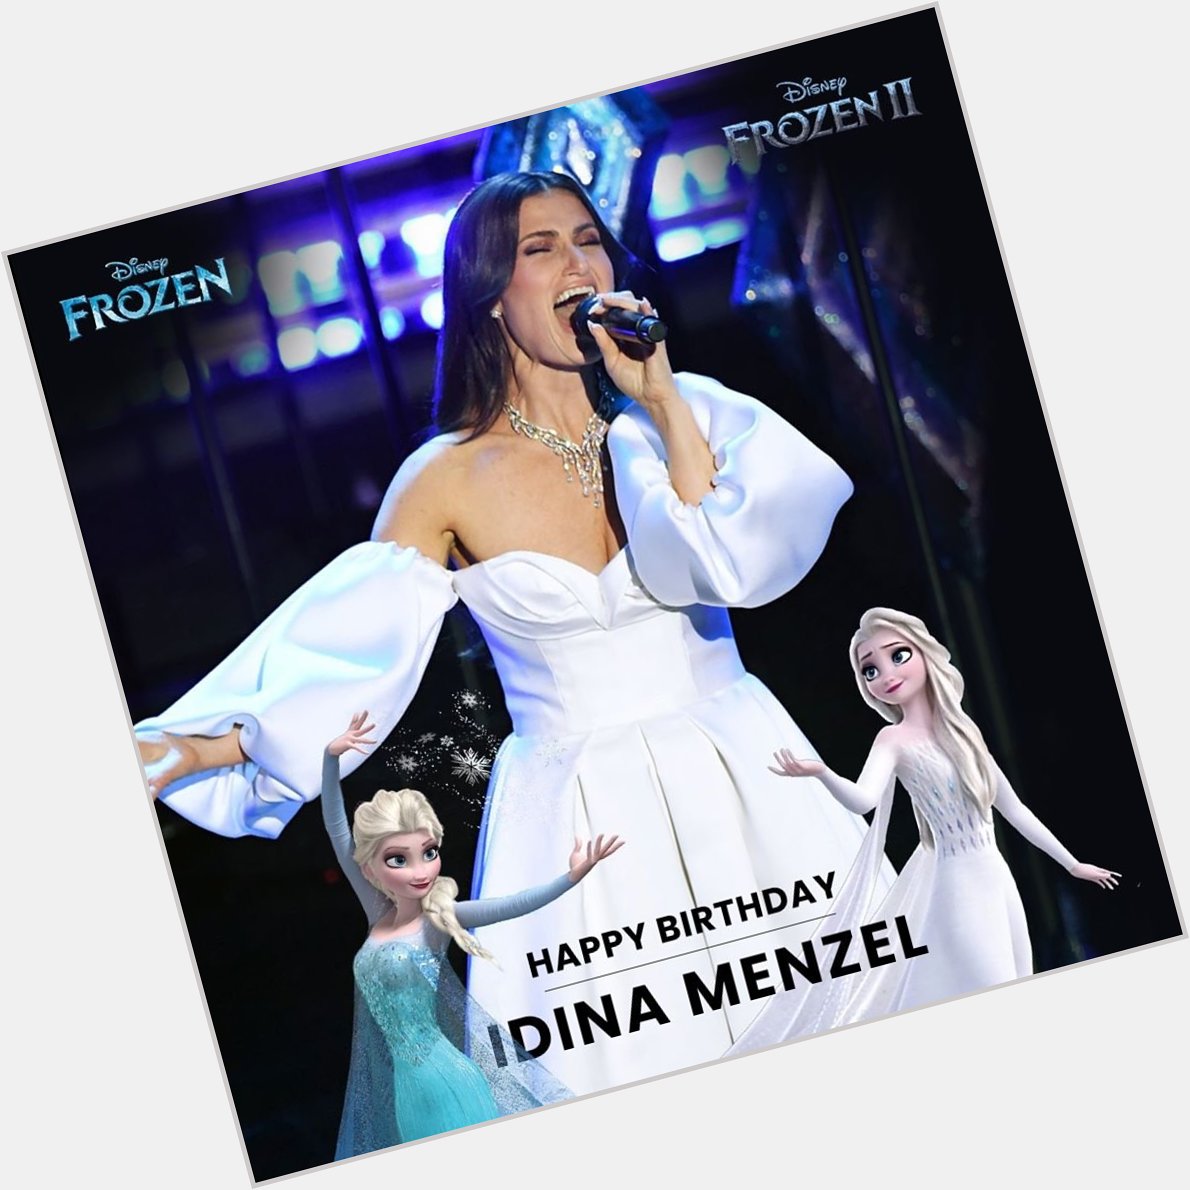 Happy Birthday to Idina Menzel, the voice of Disney\s Frozen\s Elsa!  